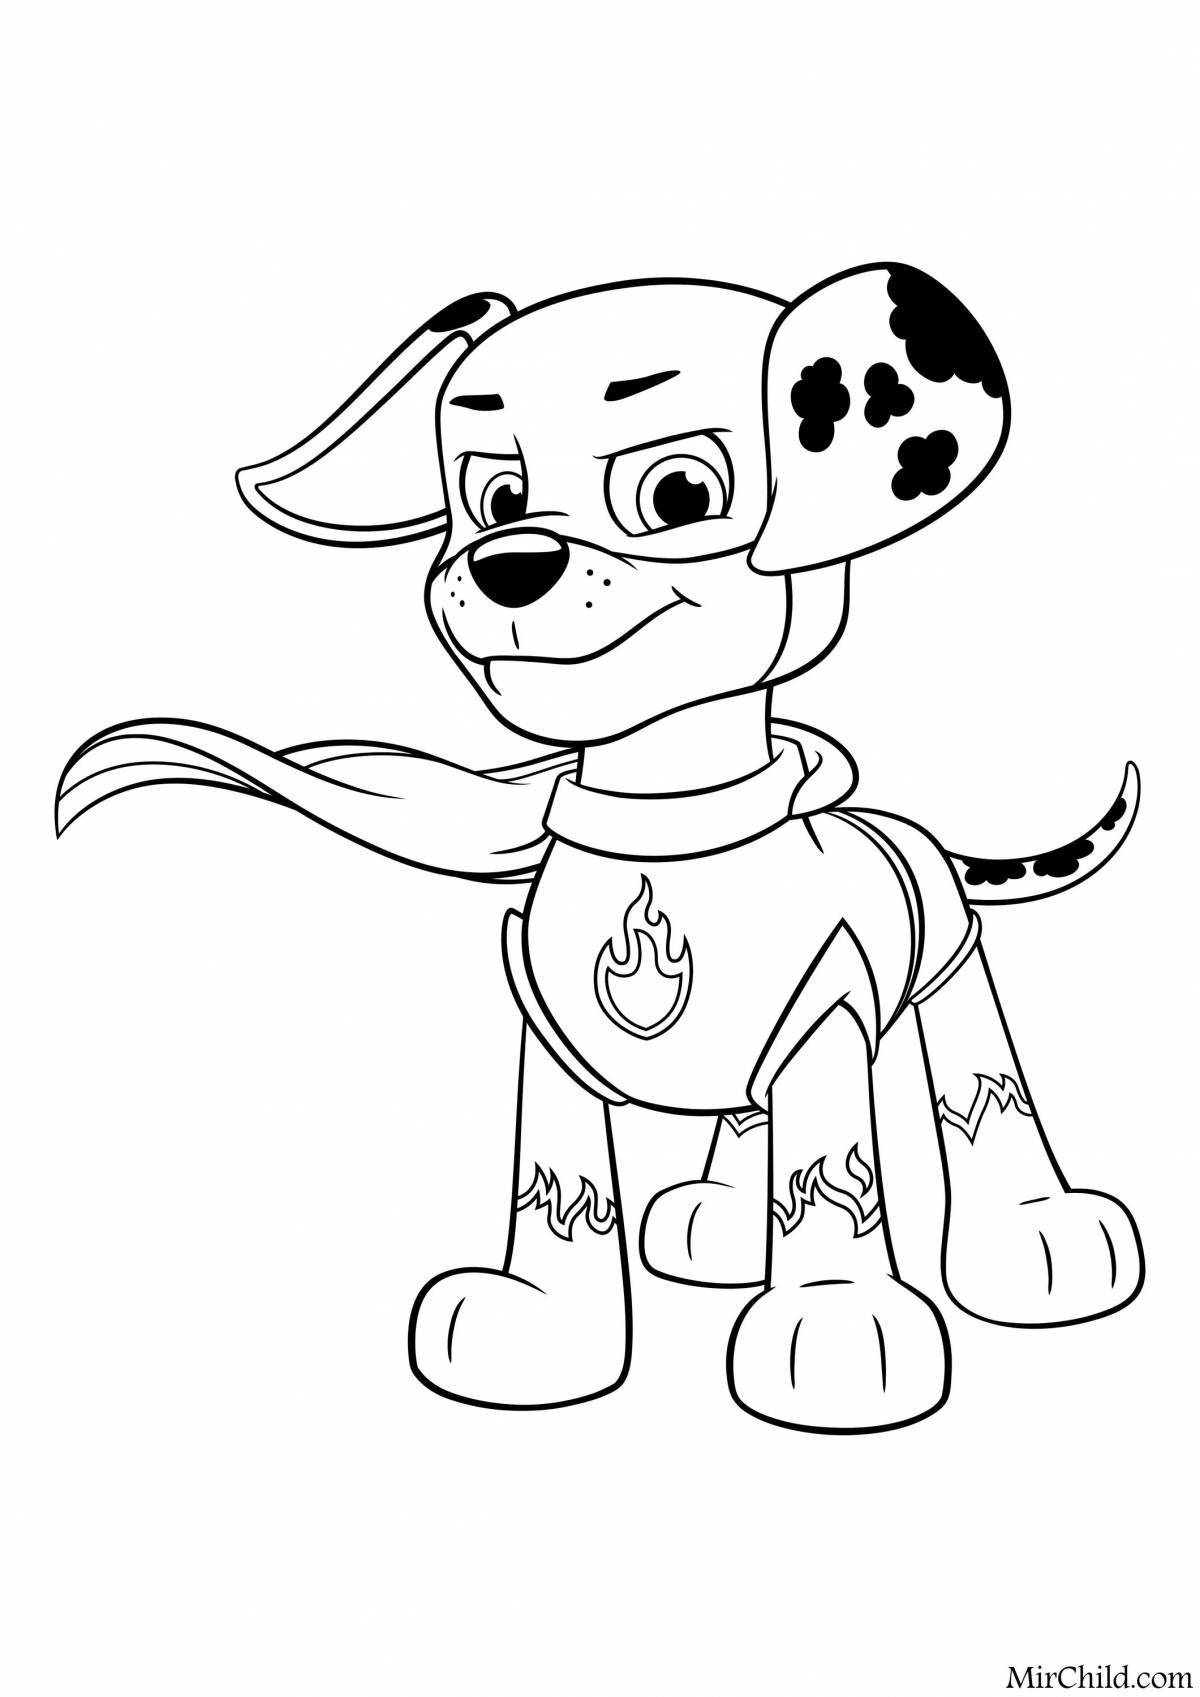 Fun coloring page paw patrol super puppies